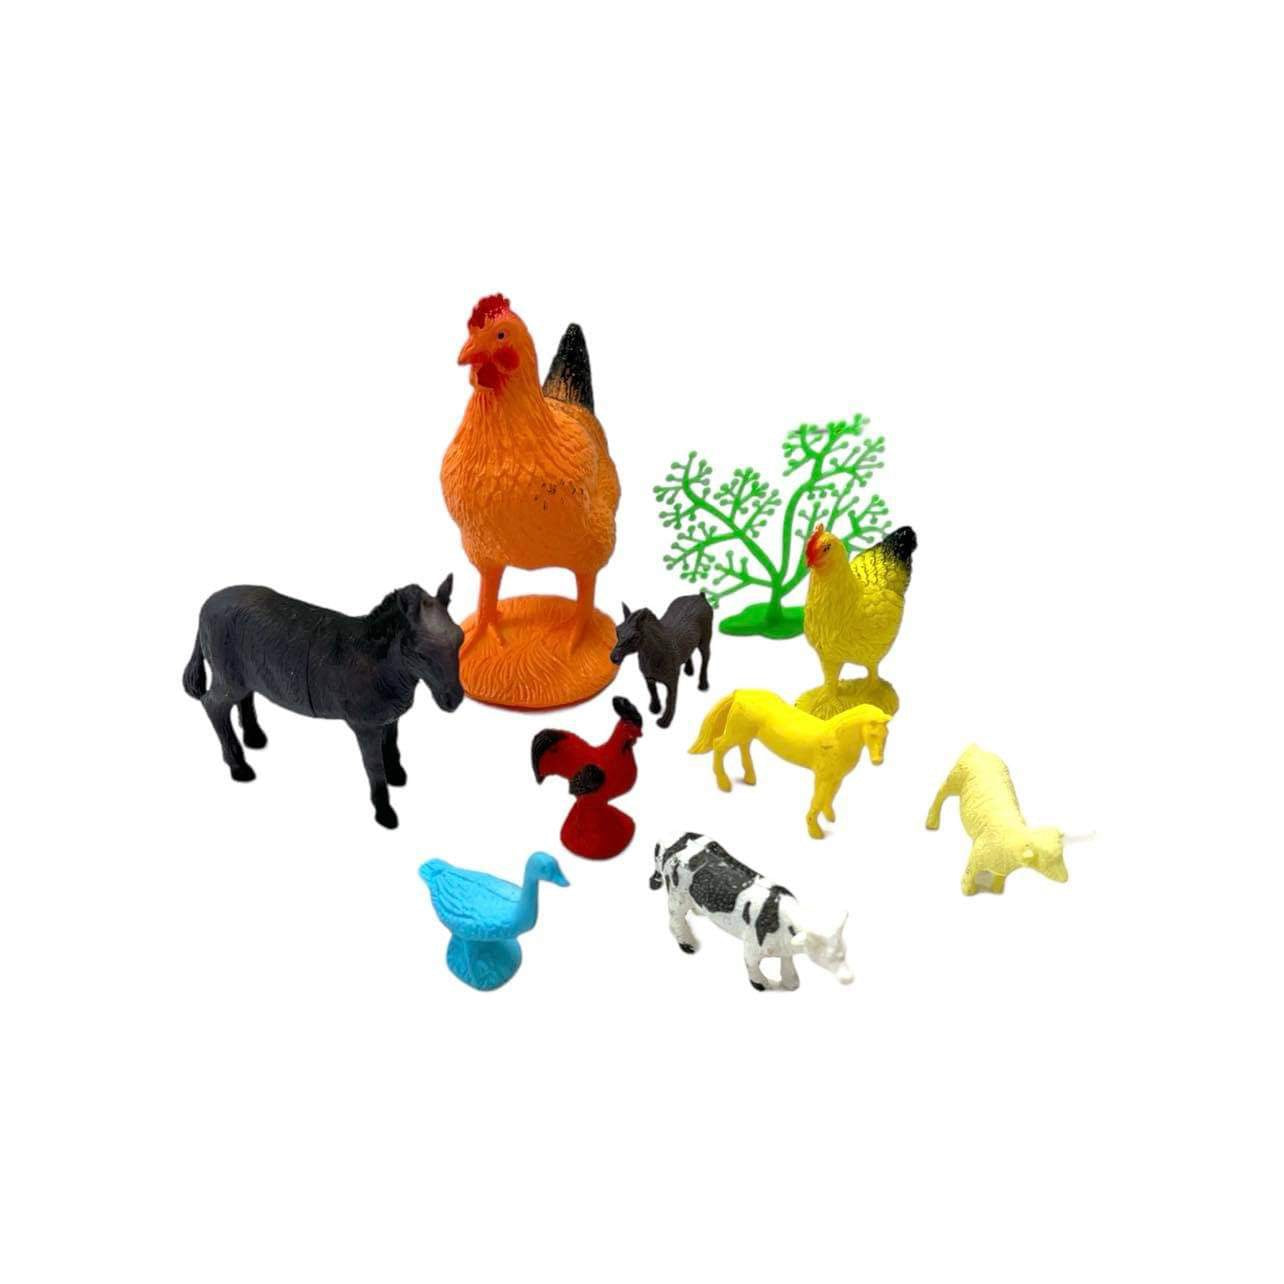 Farm Animals Toy Figures -3 || العاب مجسمات حيوانات المزرعة-3